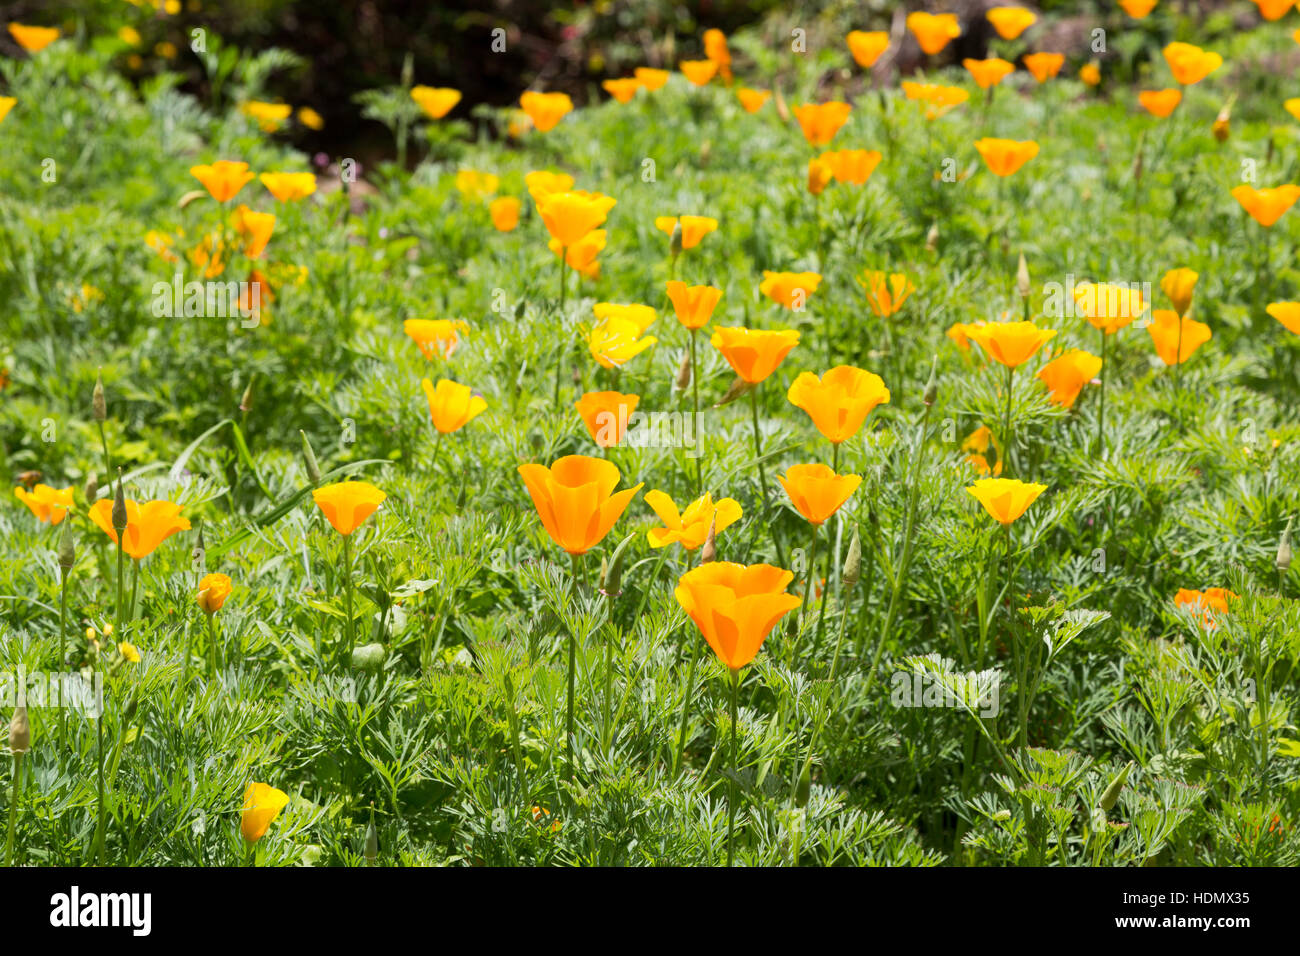 California poppy (Eschscholzia californica), aka golden poppy, California sunlight, cup of gold, full of flowers in garden, Campos do Jordao, Brazil Stock Photo